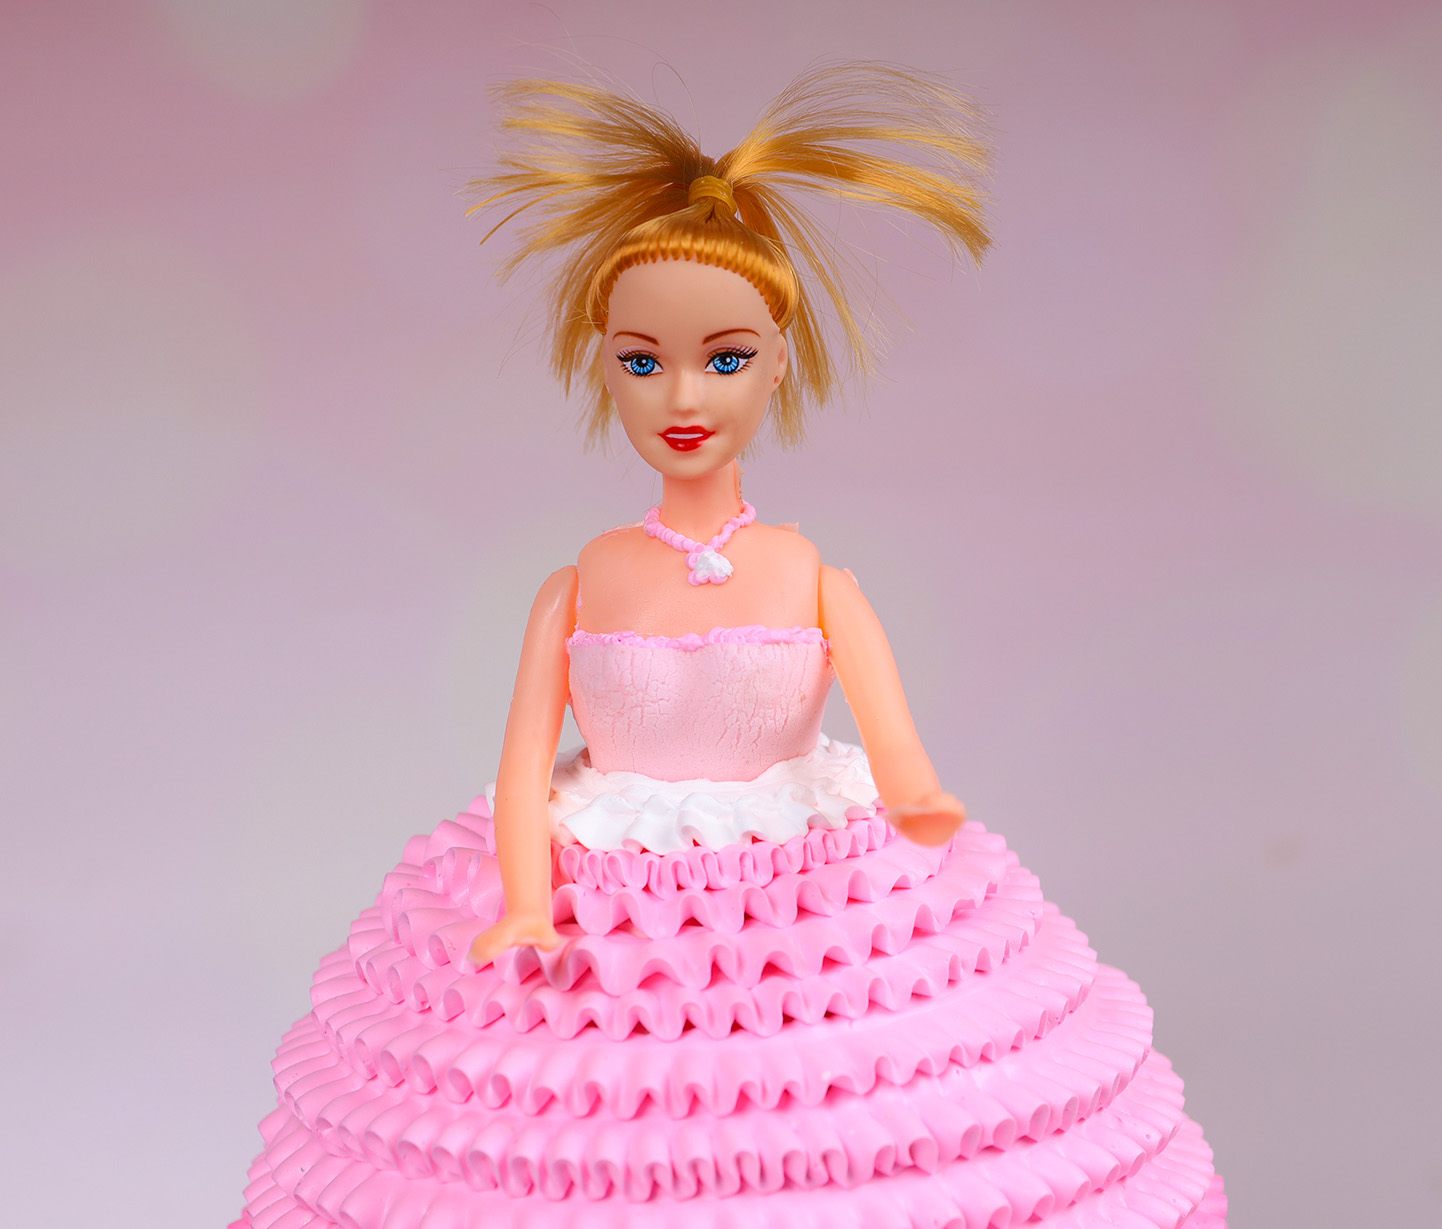 Barbie doll cake chocolate flever 1kg Rs1200/2kg 2400